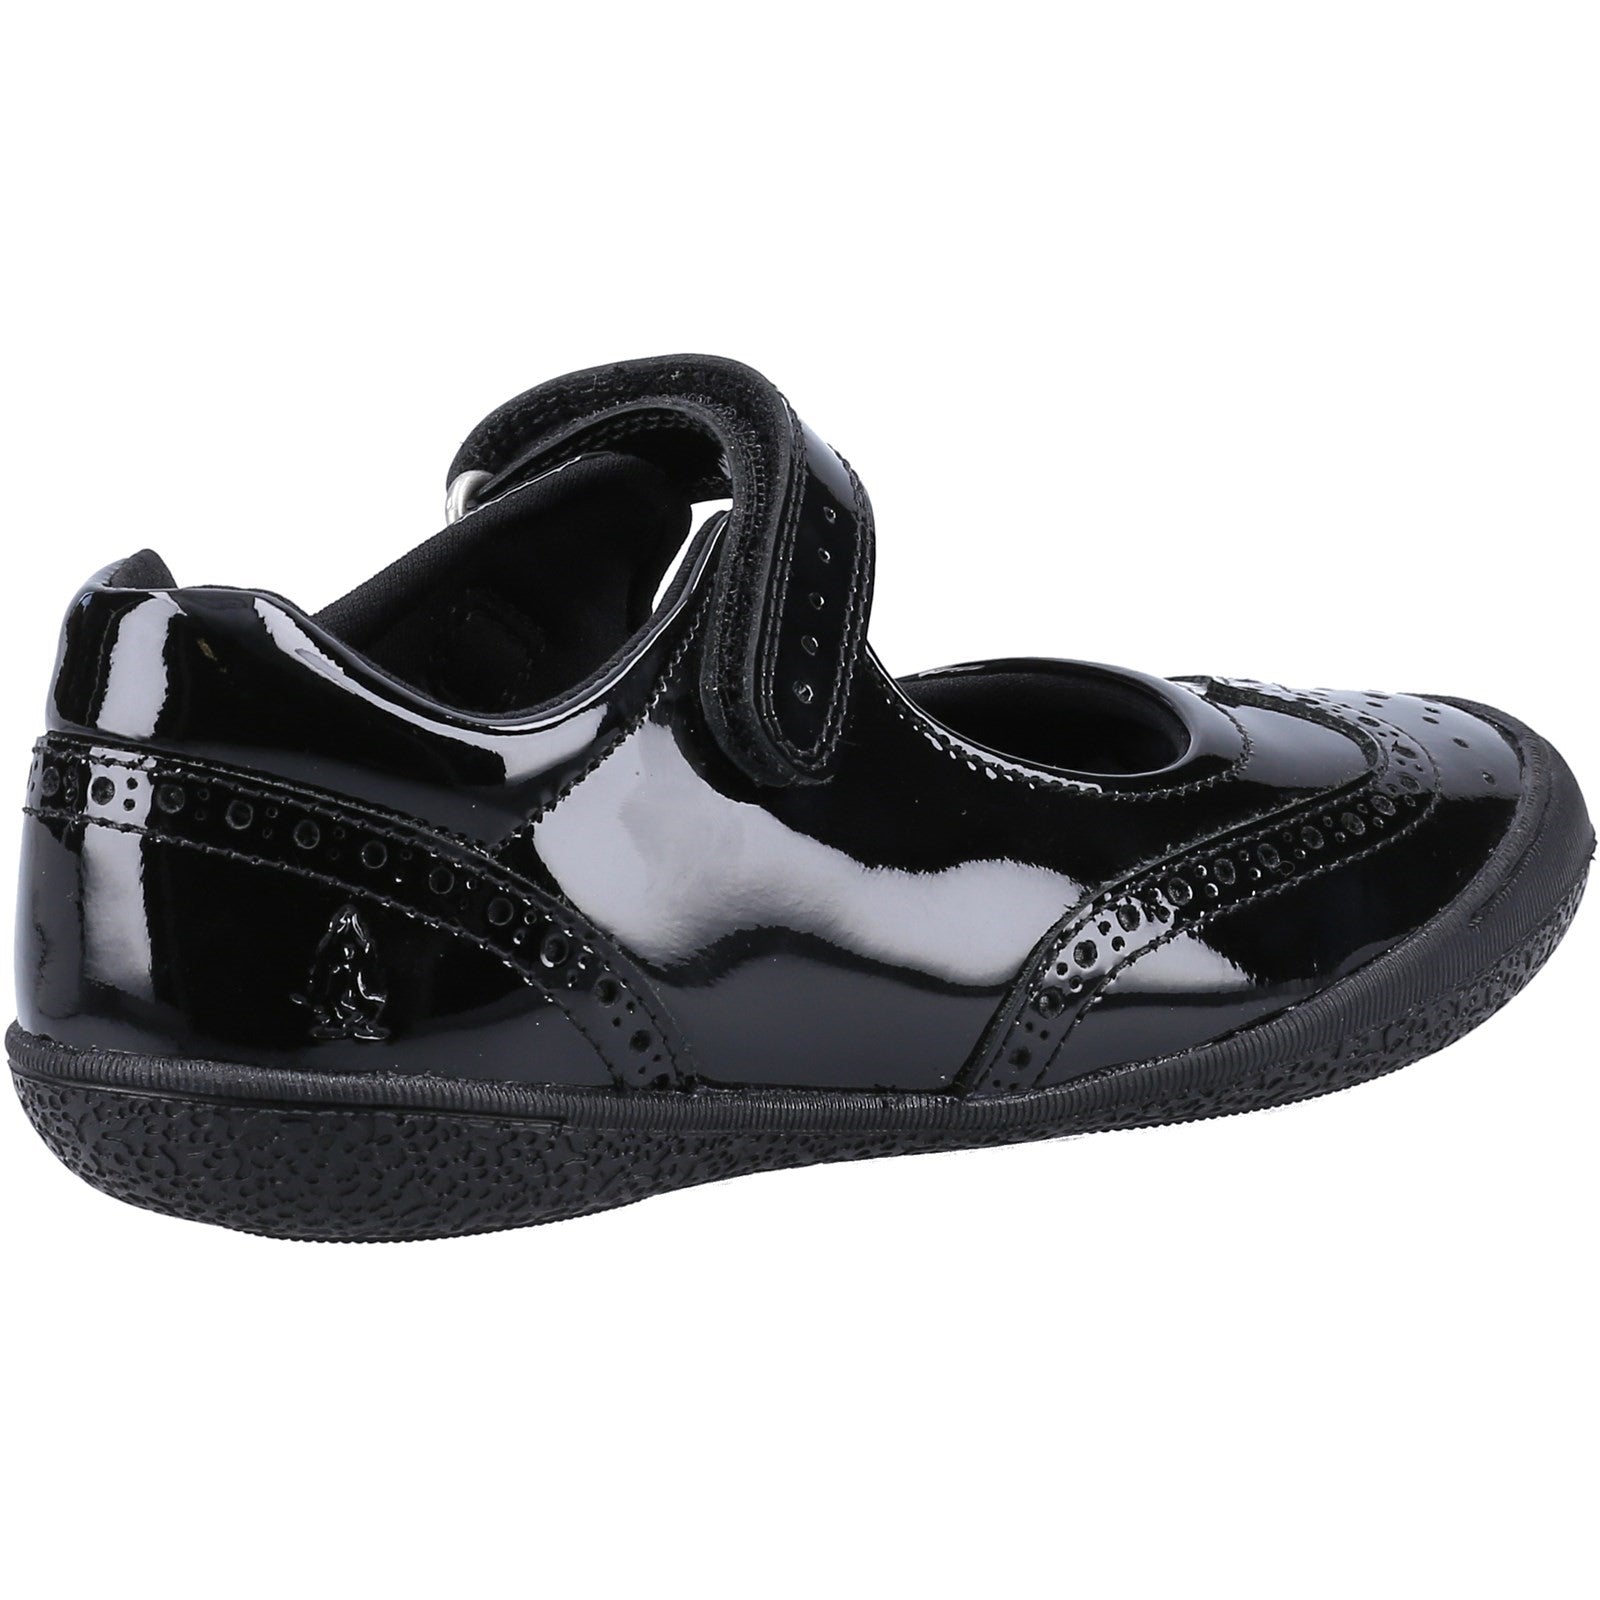 Hush Puppies Girls Rina Shoe Patent School Shoes - Black